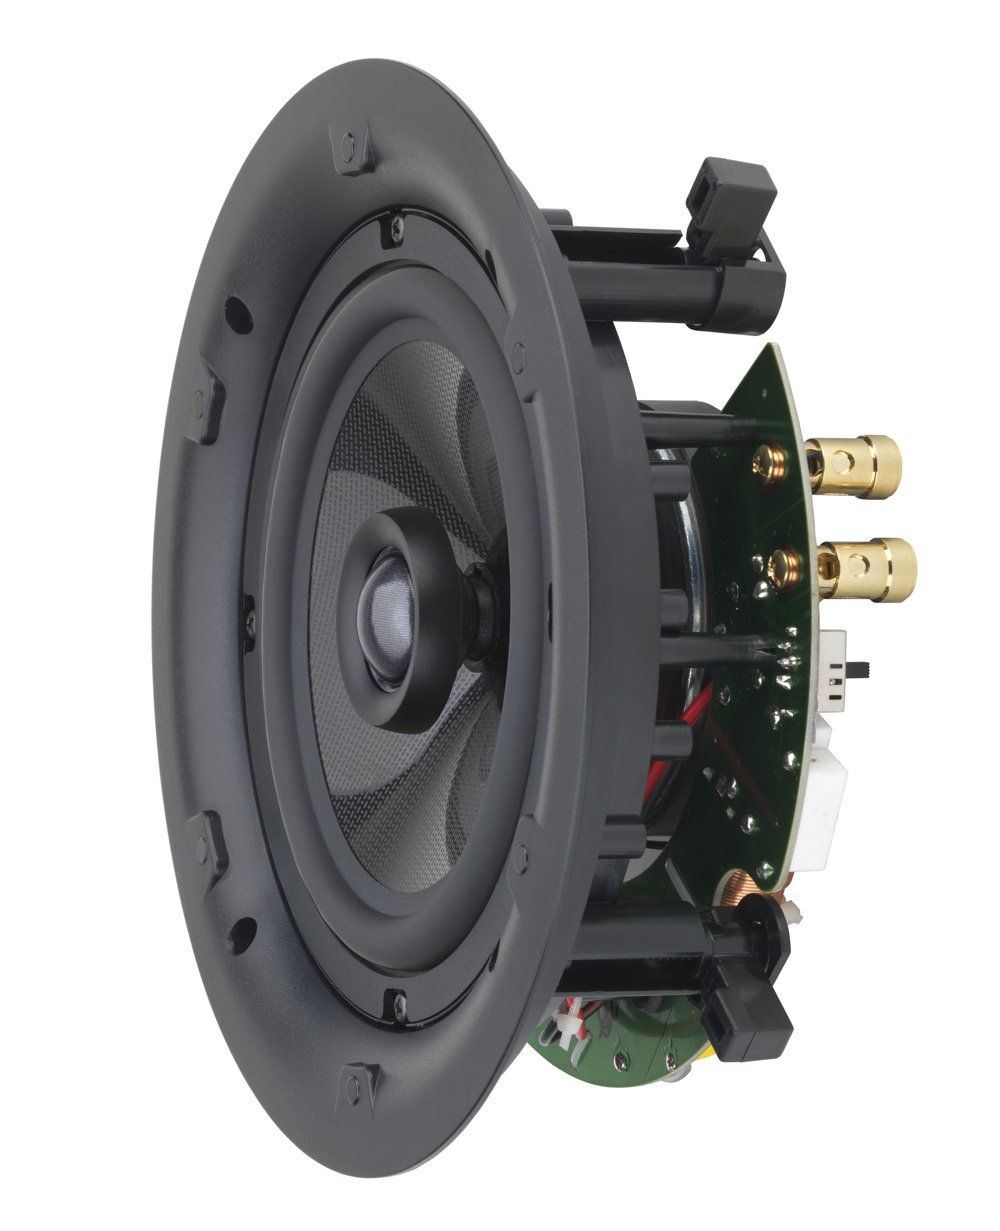 Q Acoustics 5.0 Home Cinema 6.5" Ceiling Speaker Package - 5 x QI65P - K&B Audio